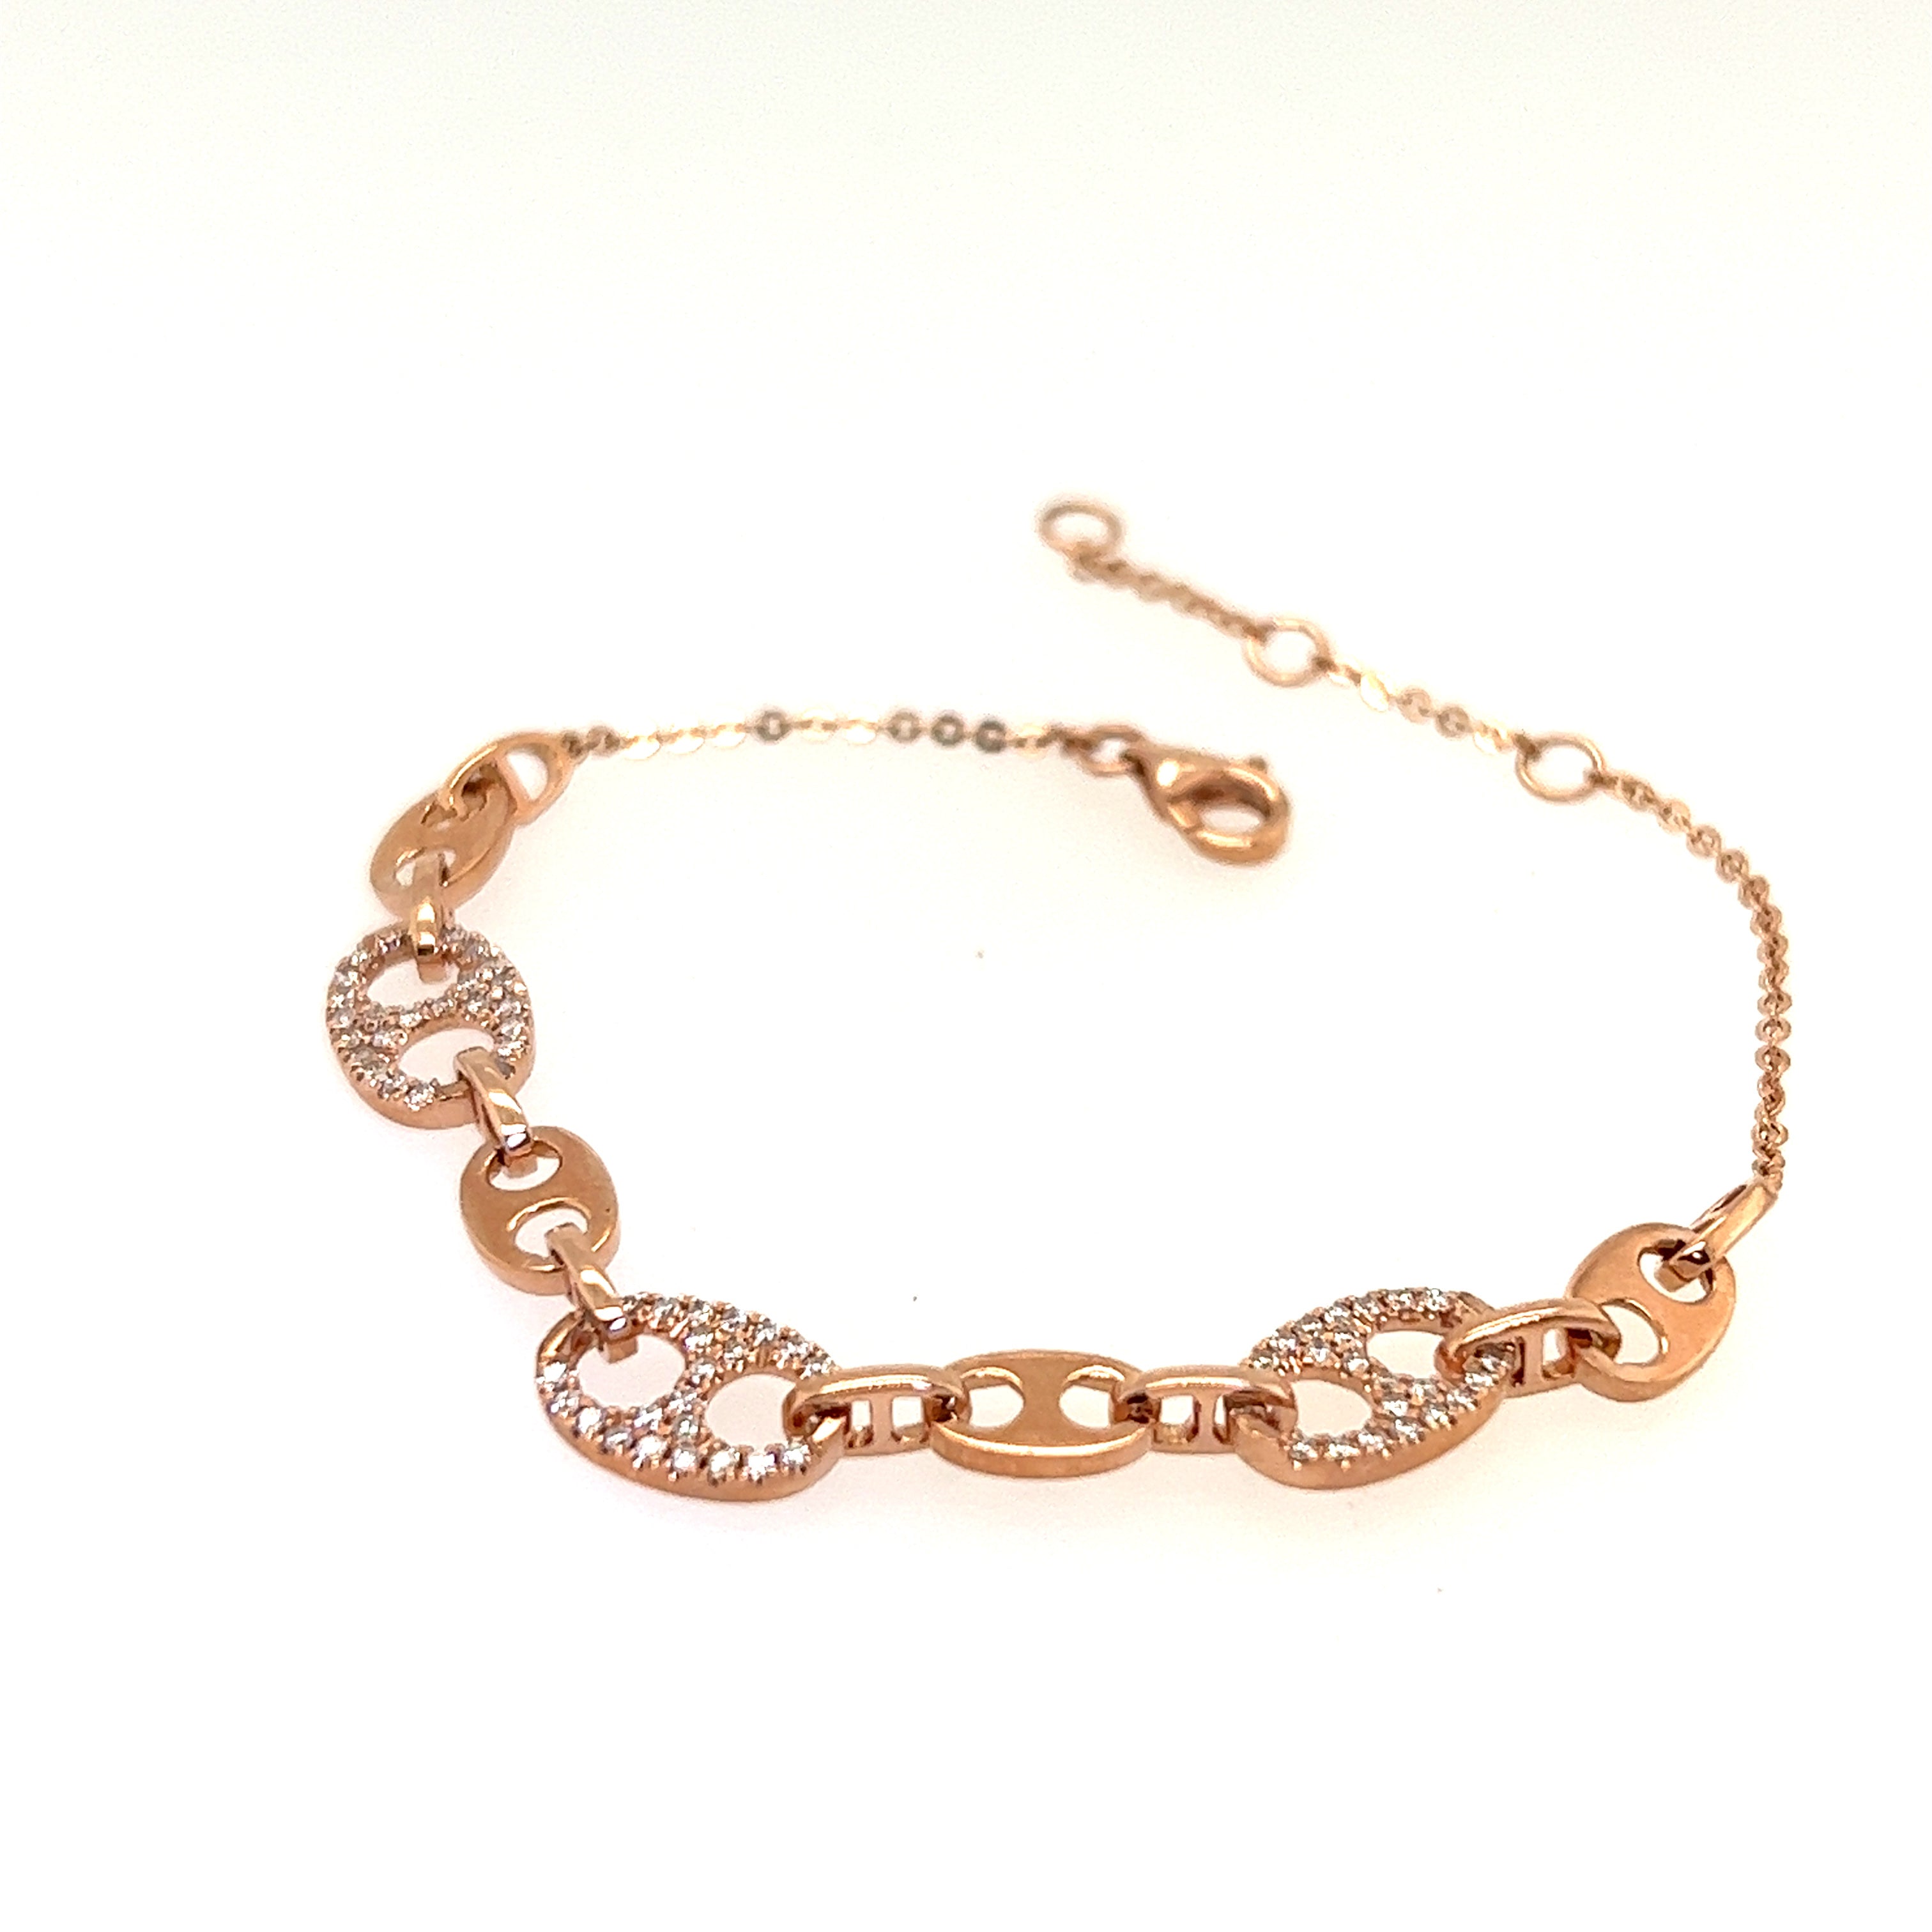 Buy Kooljewelry Mens 14k Yellow Gold Filled Mariner Link Chain Bracelet  (7.8 mm, 9 inch) at Amazon.in